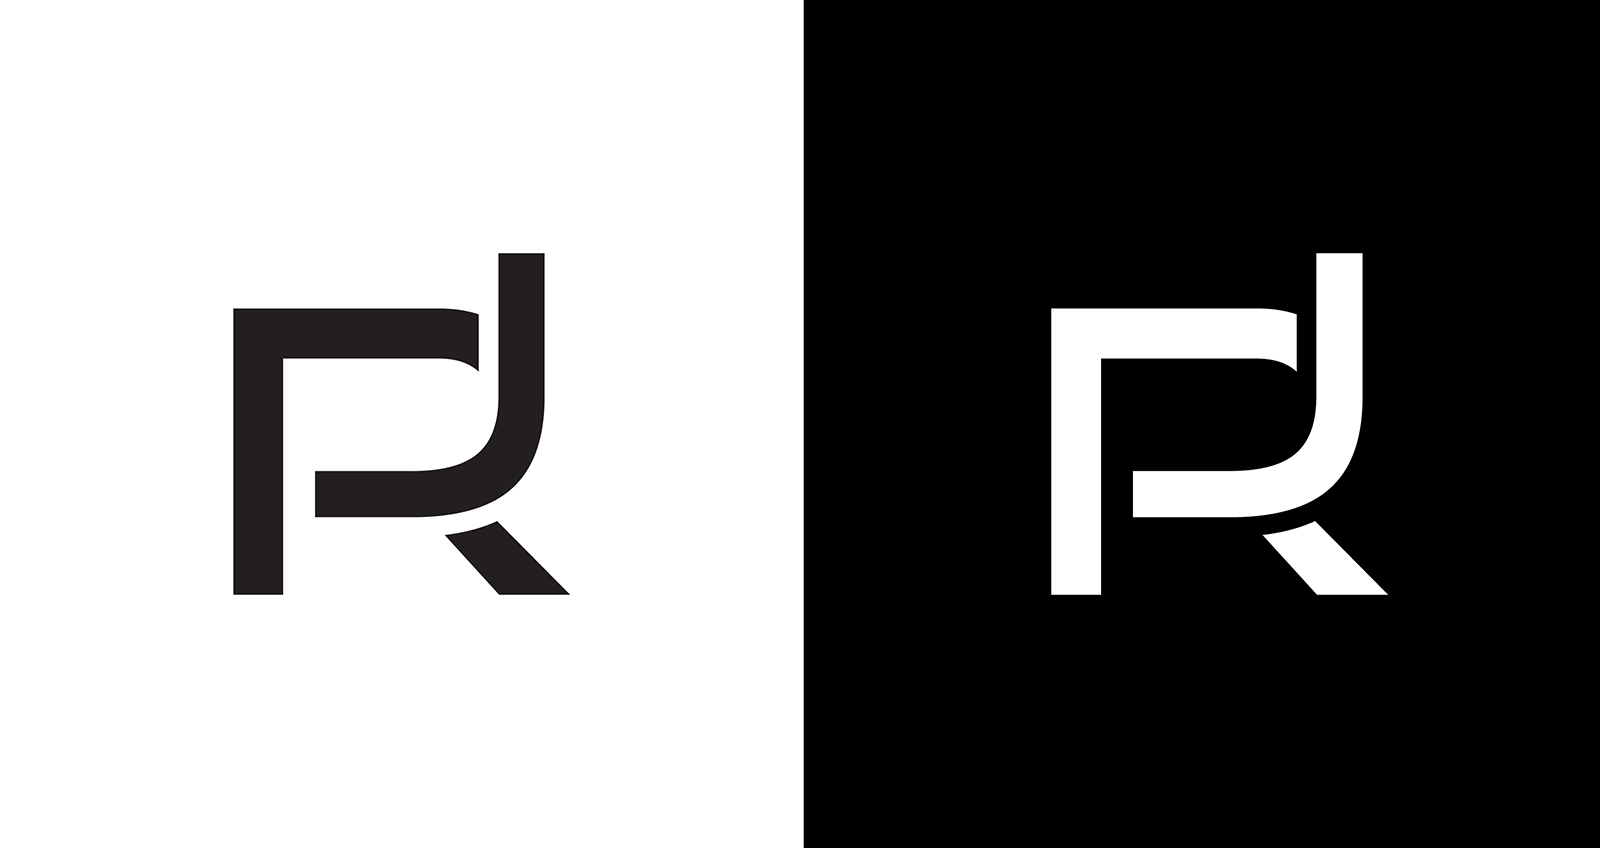 Letter rj, jr abstract company or brand Logo Design